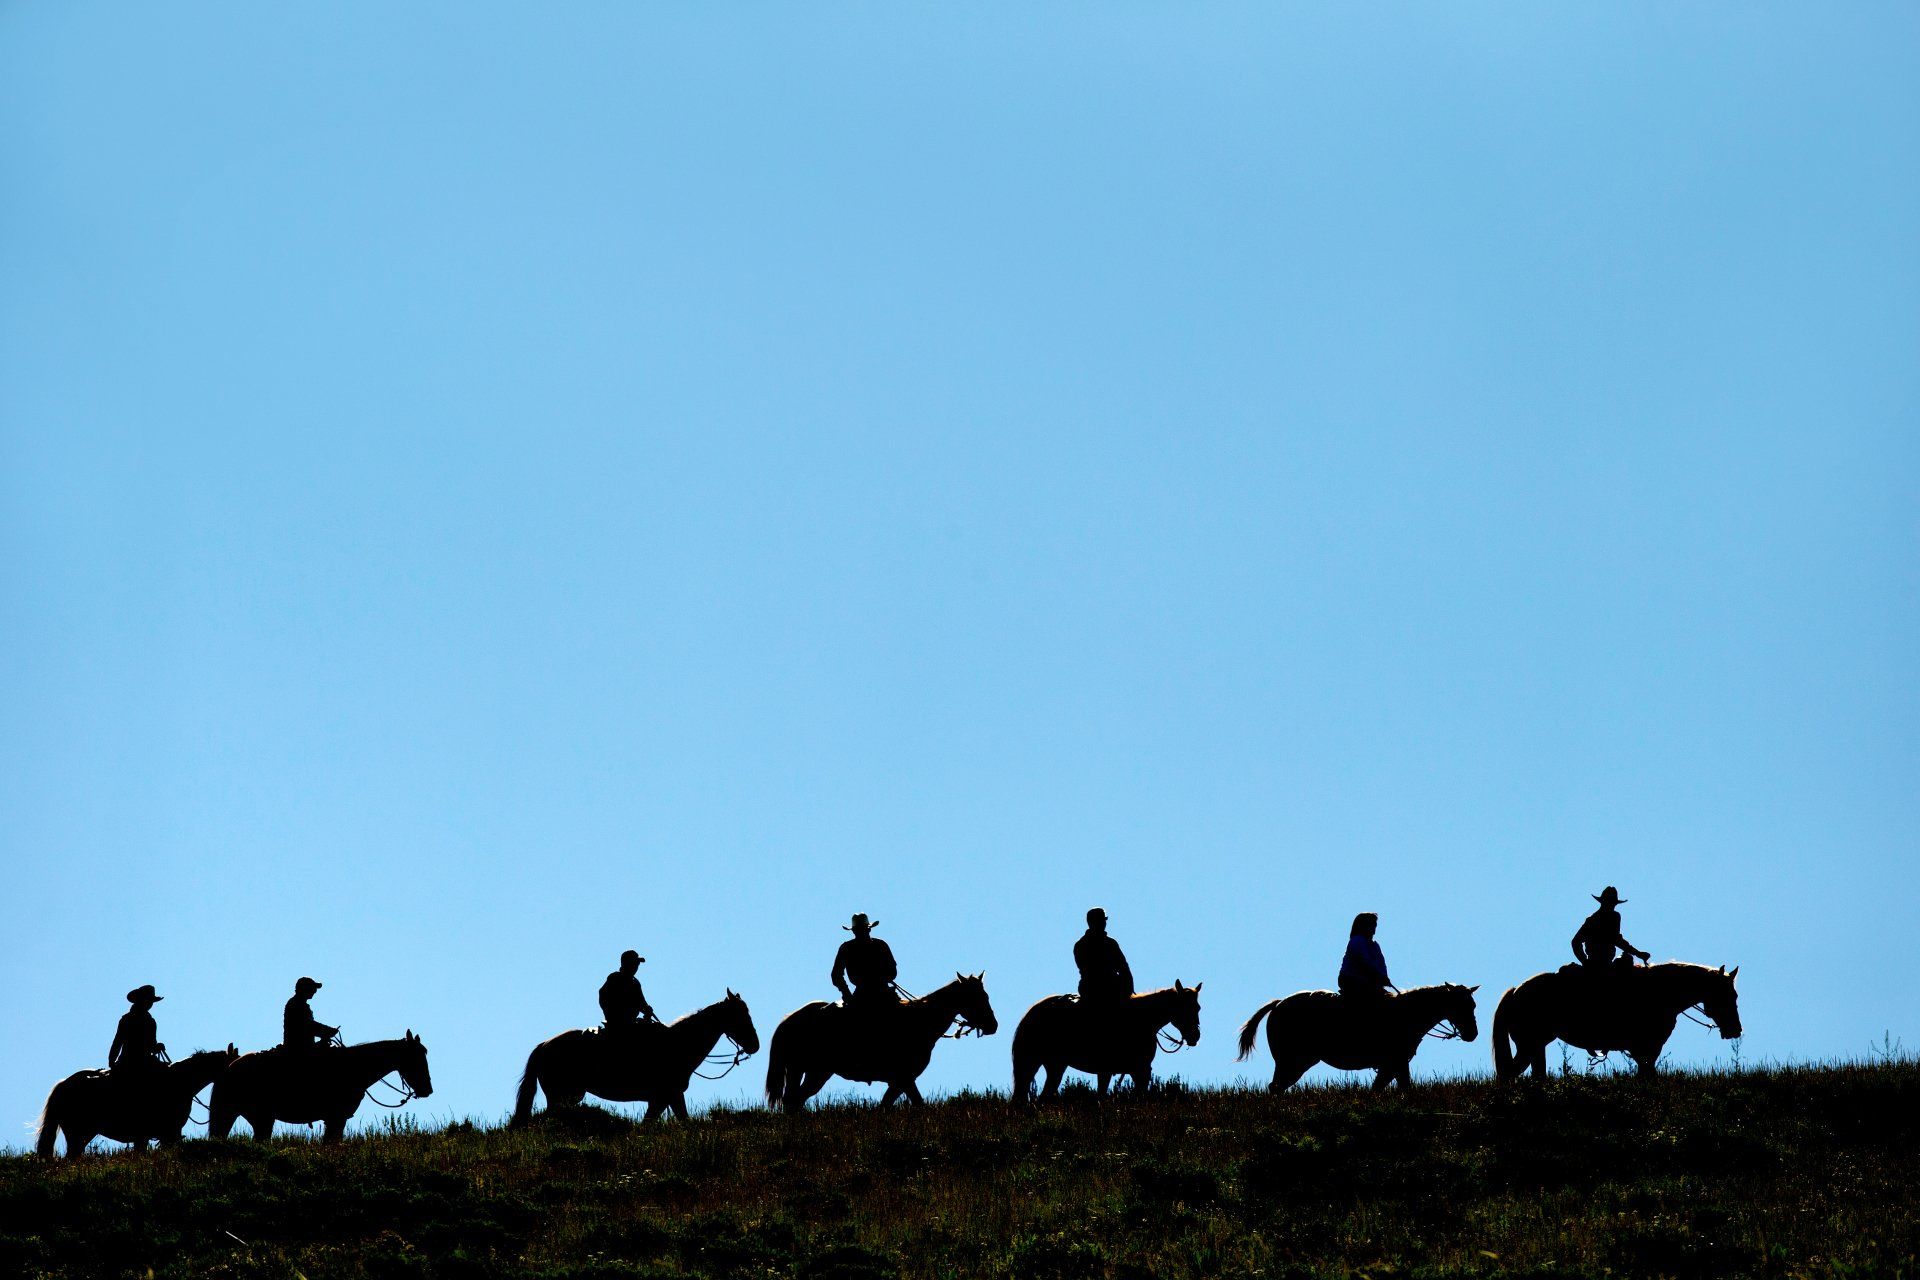 Employees enjoy a horseback ride as part of a western-themed corporate reward trip